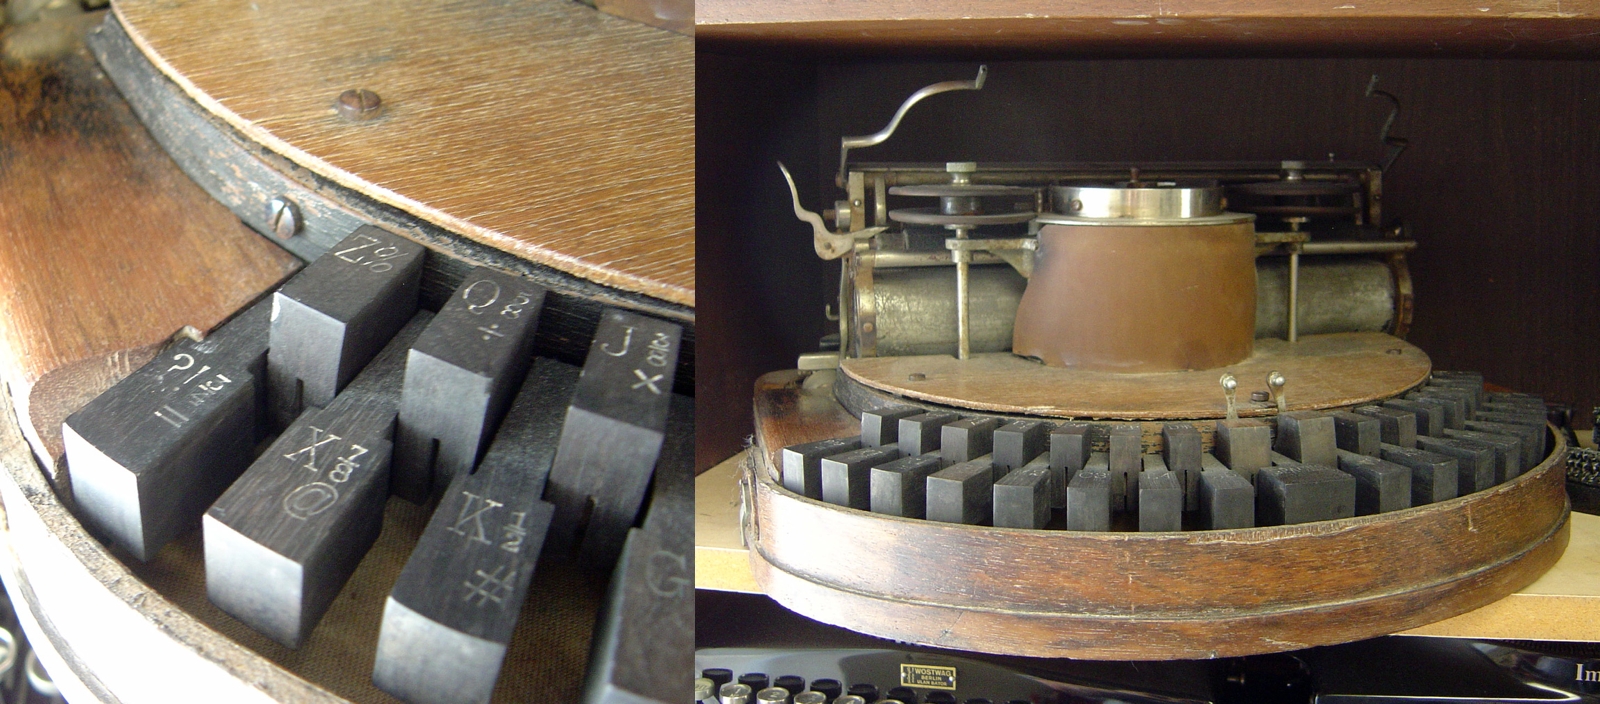 The '@' symbol on the keyboard of an 1889 Hammond typewriter